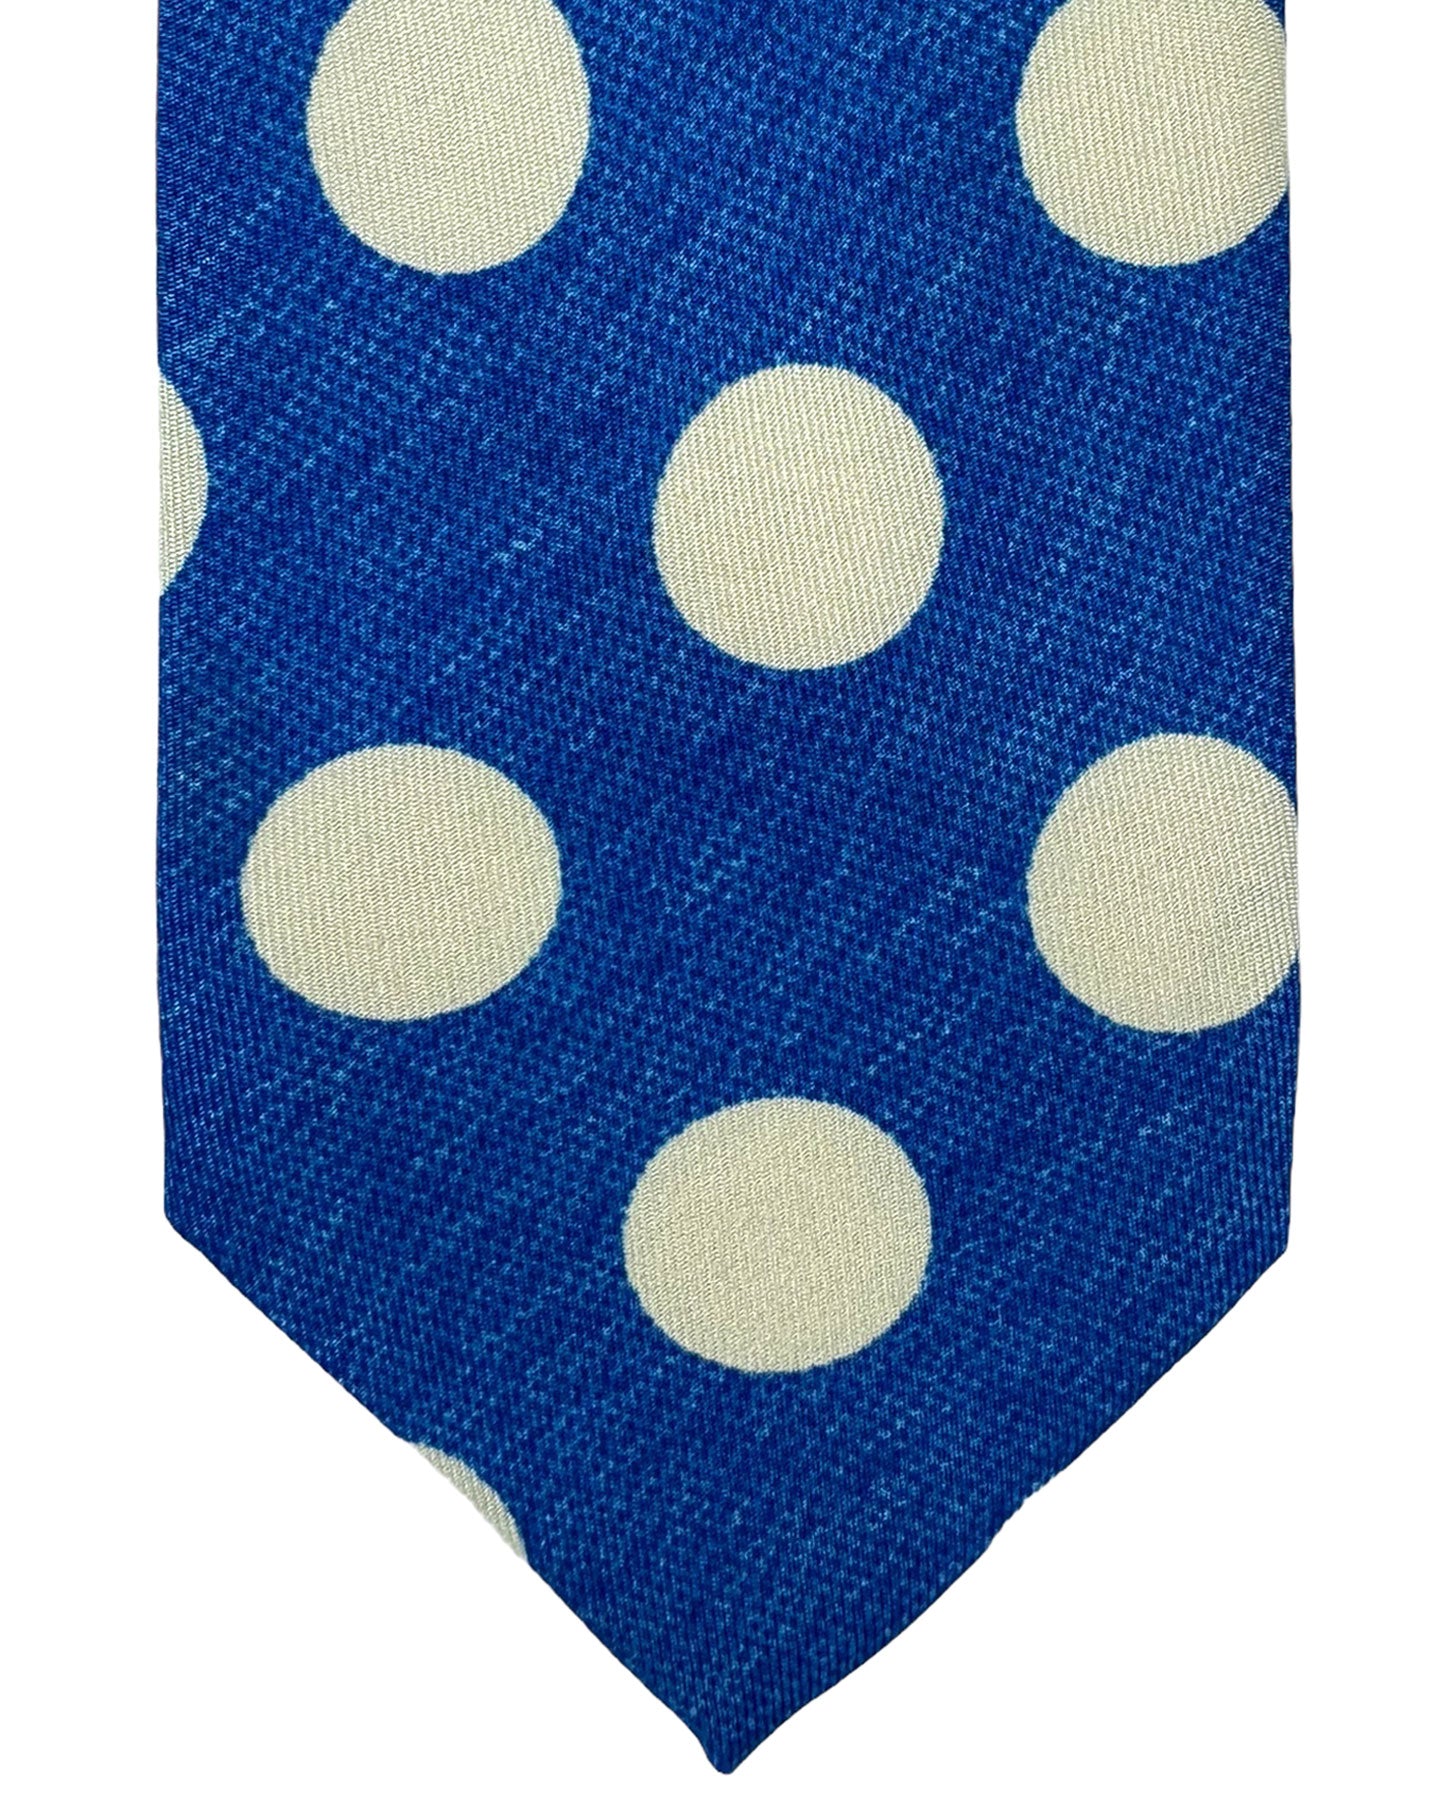 Barba Sevenfold Tie Royal Blue White Polka Dots Design - Sartorial Neckwear